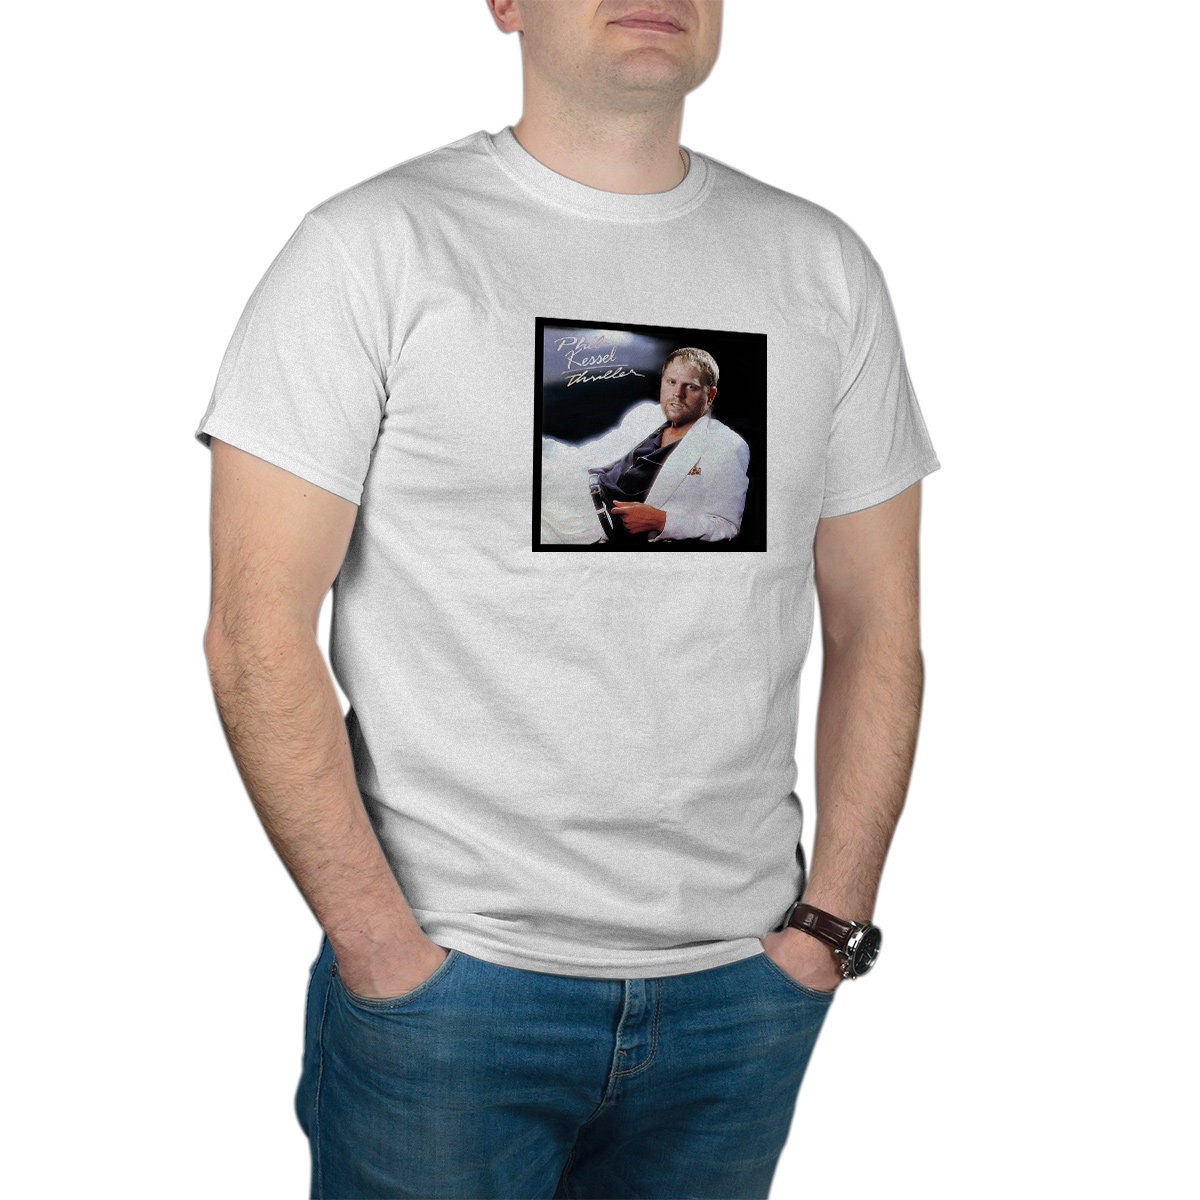 Gawlik Phil Kessel Thriller Pittsburgh Penguins T-Shirt, hoodie